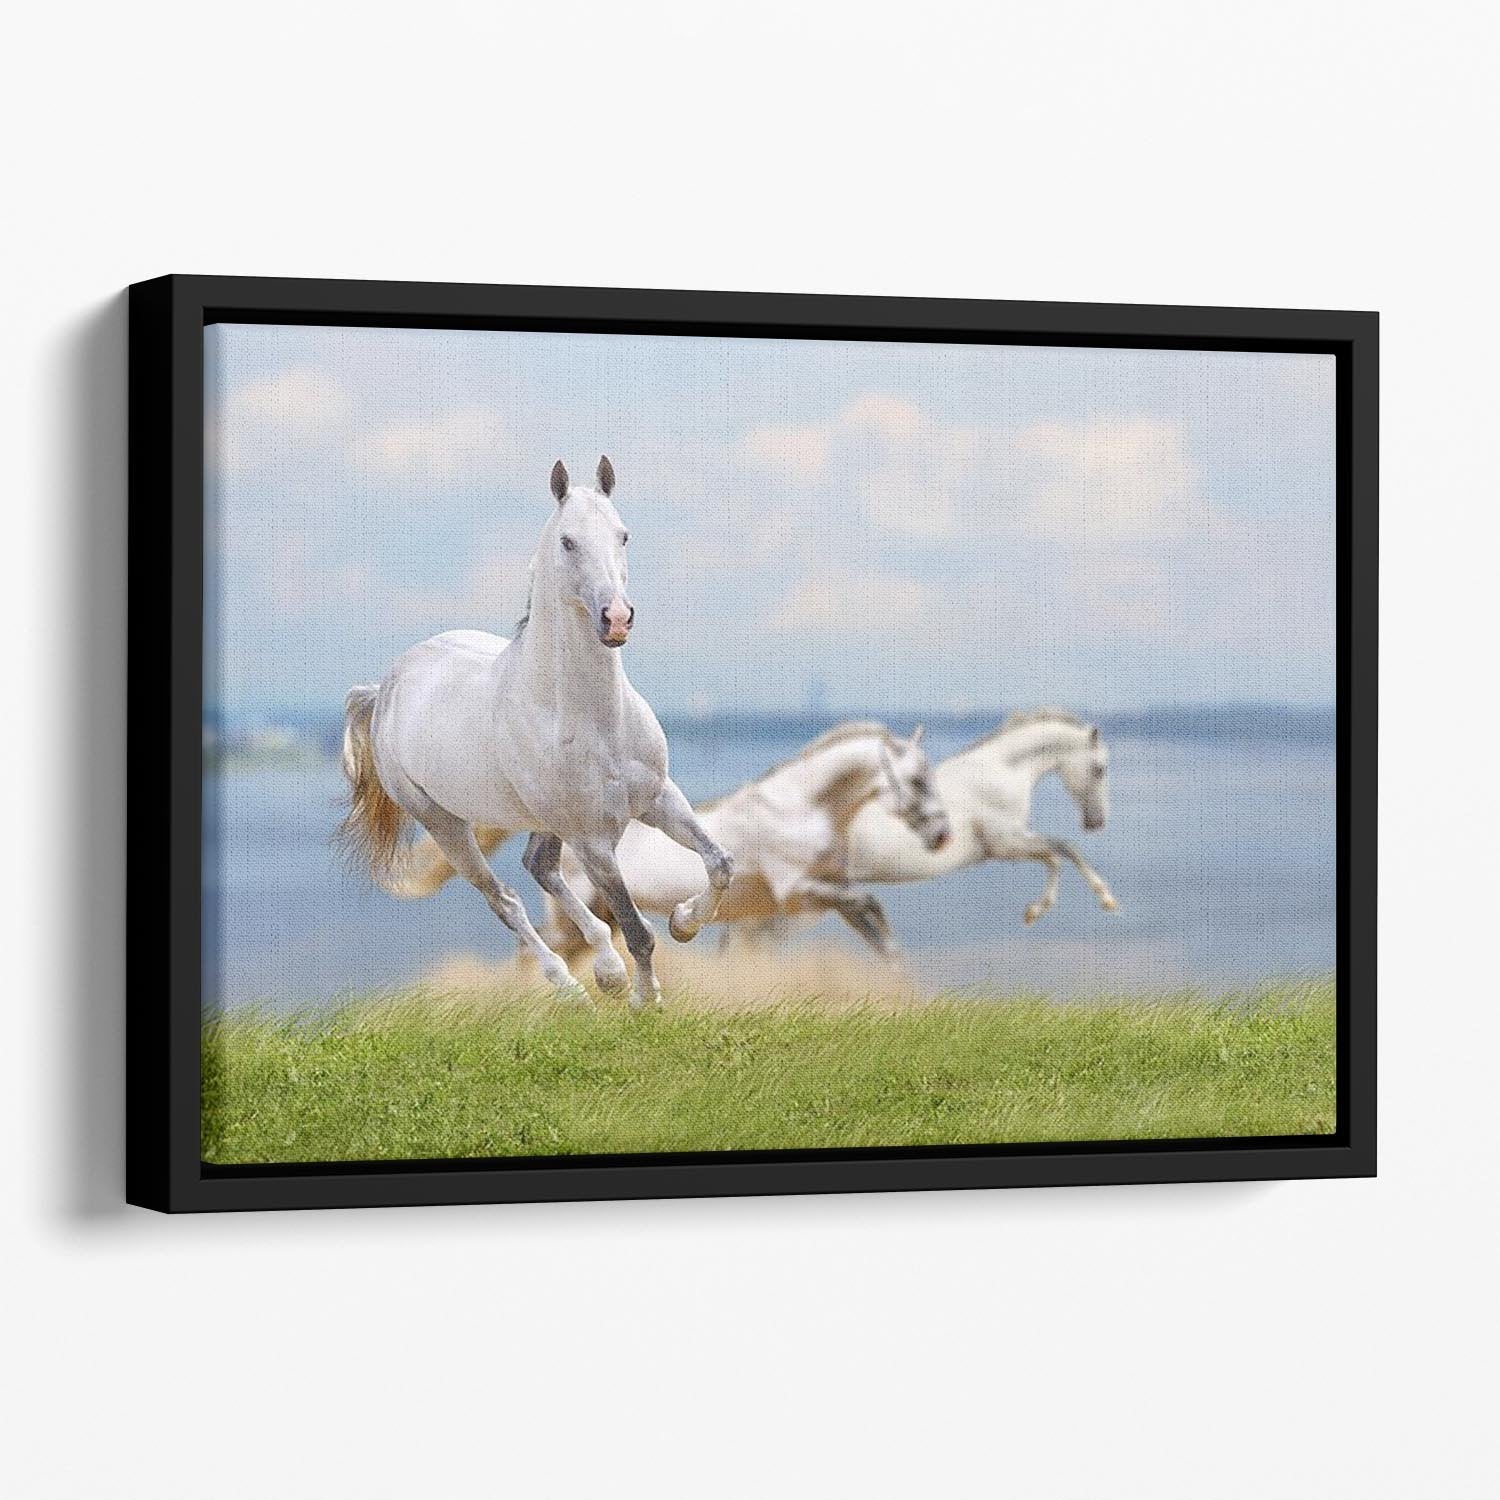 White horses running near water Floating Framed Canvas - Canvas Art Rocks - 1